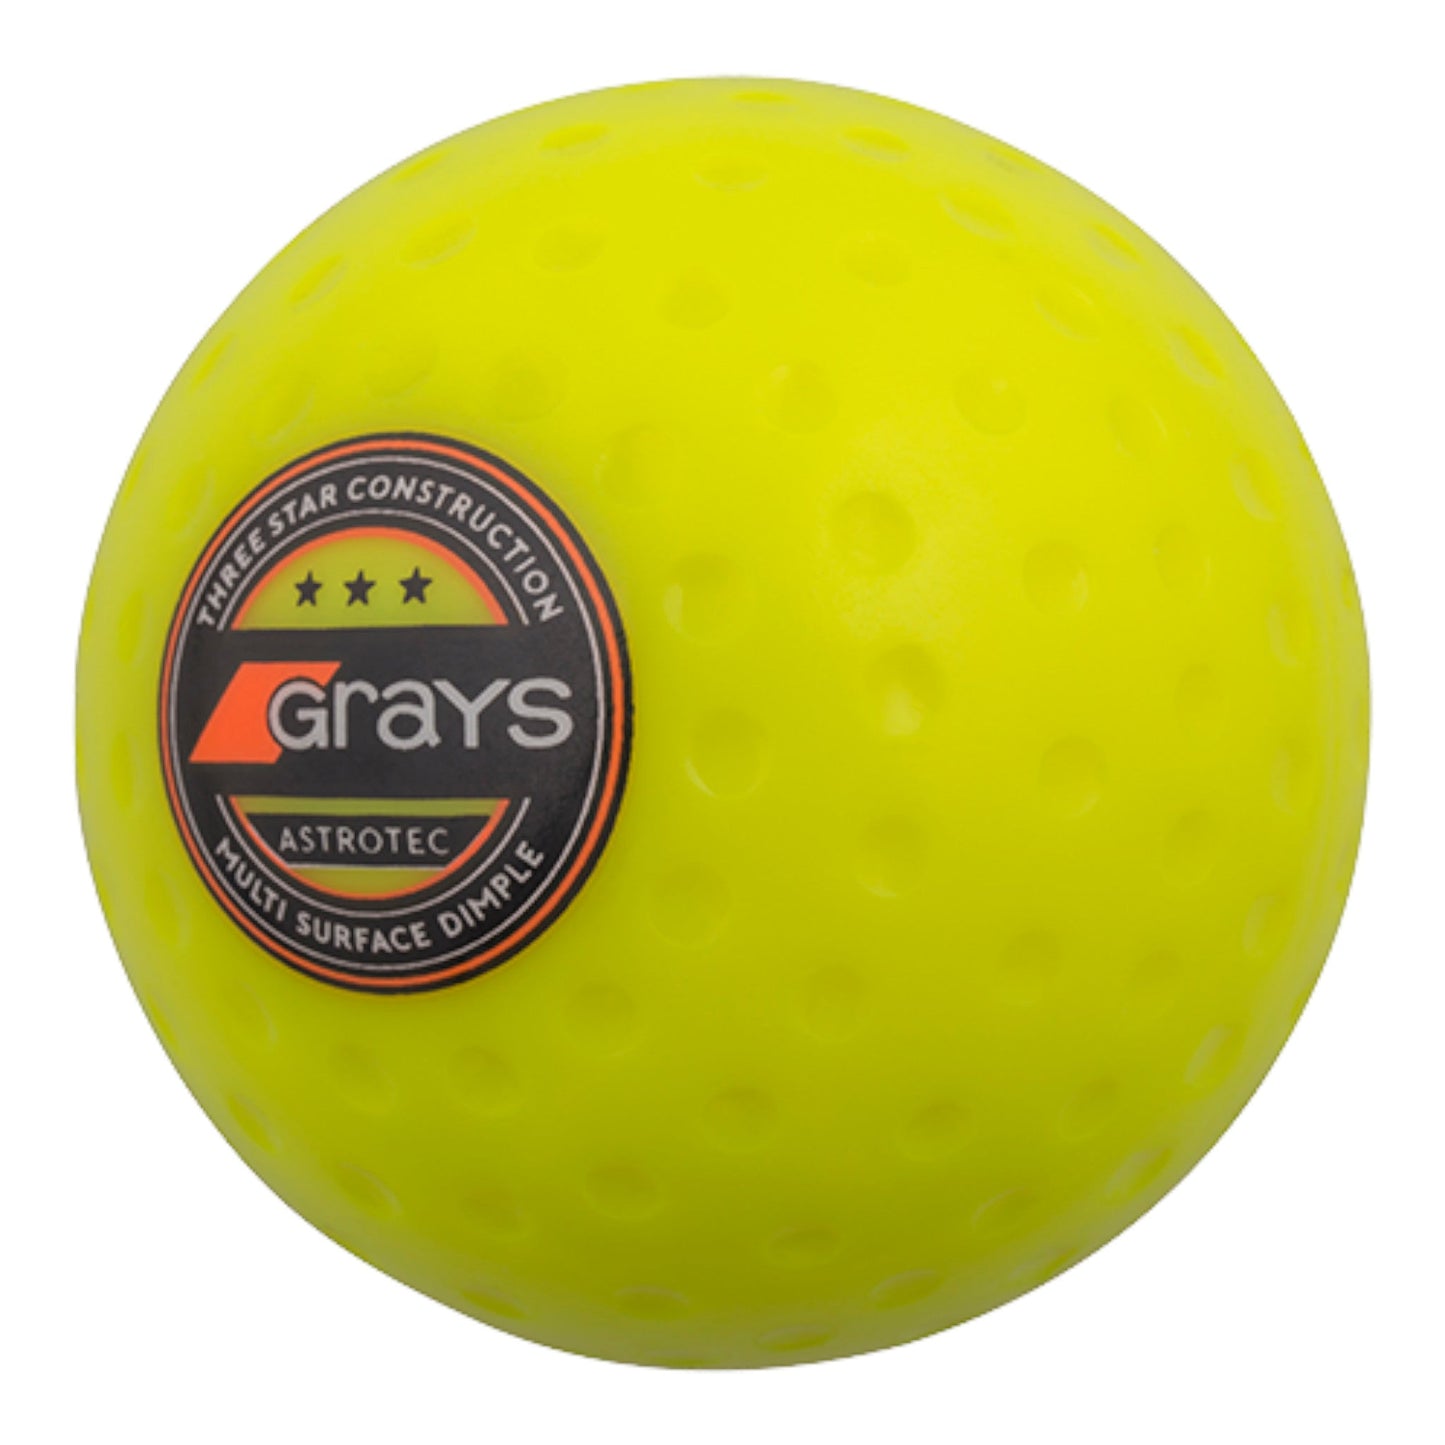 Grays Astrotec Ball Single 5.5oz